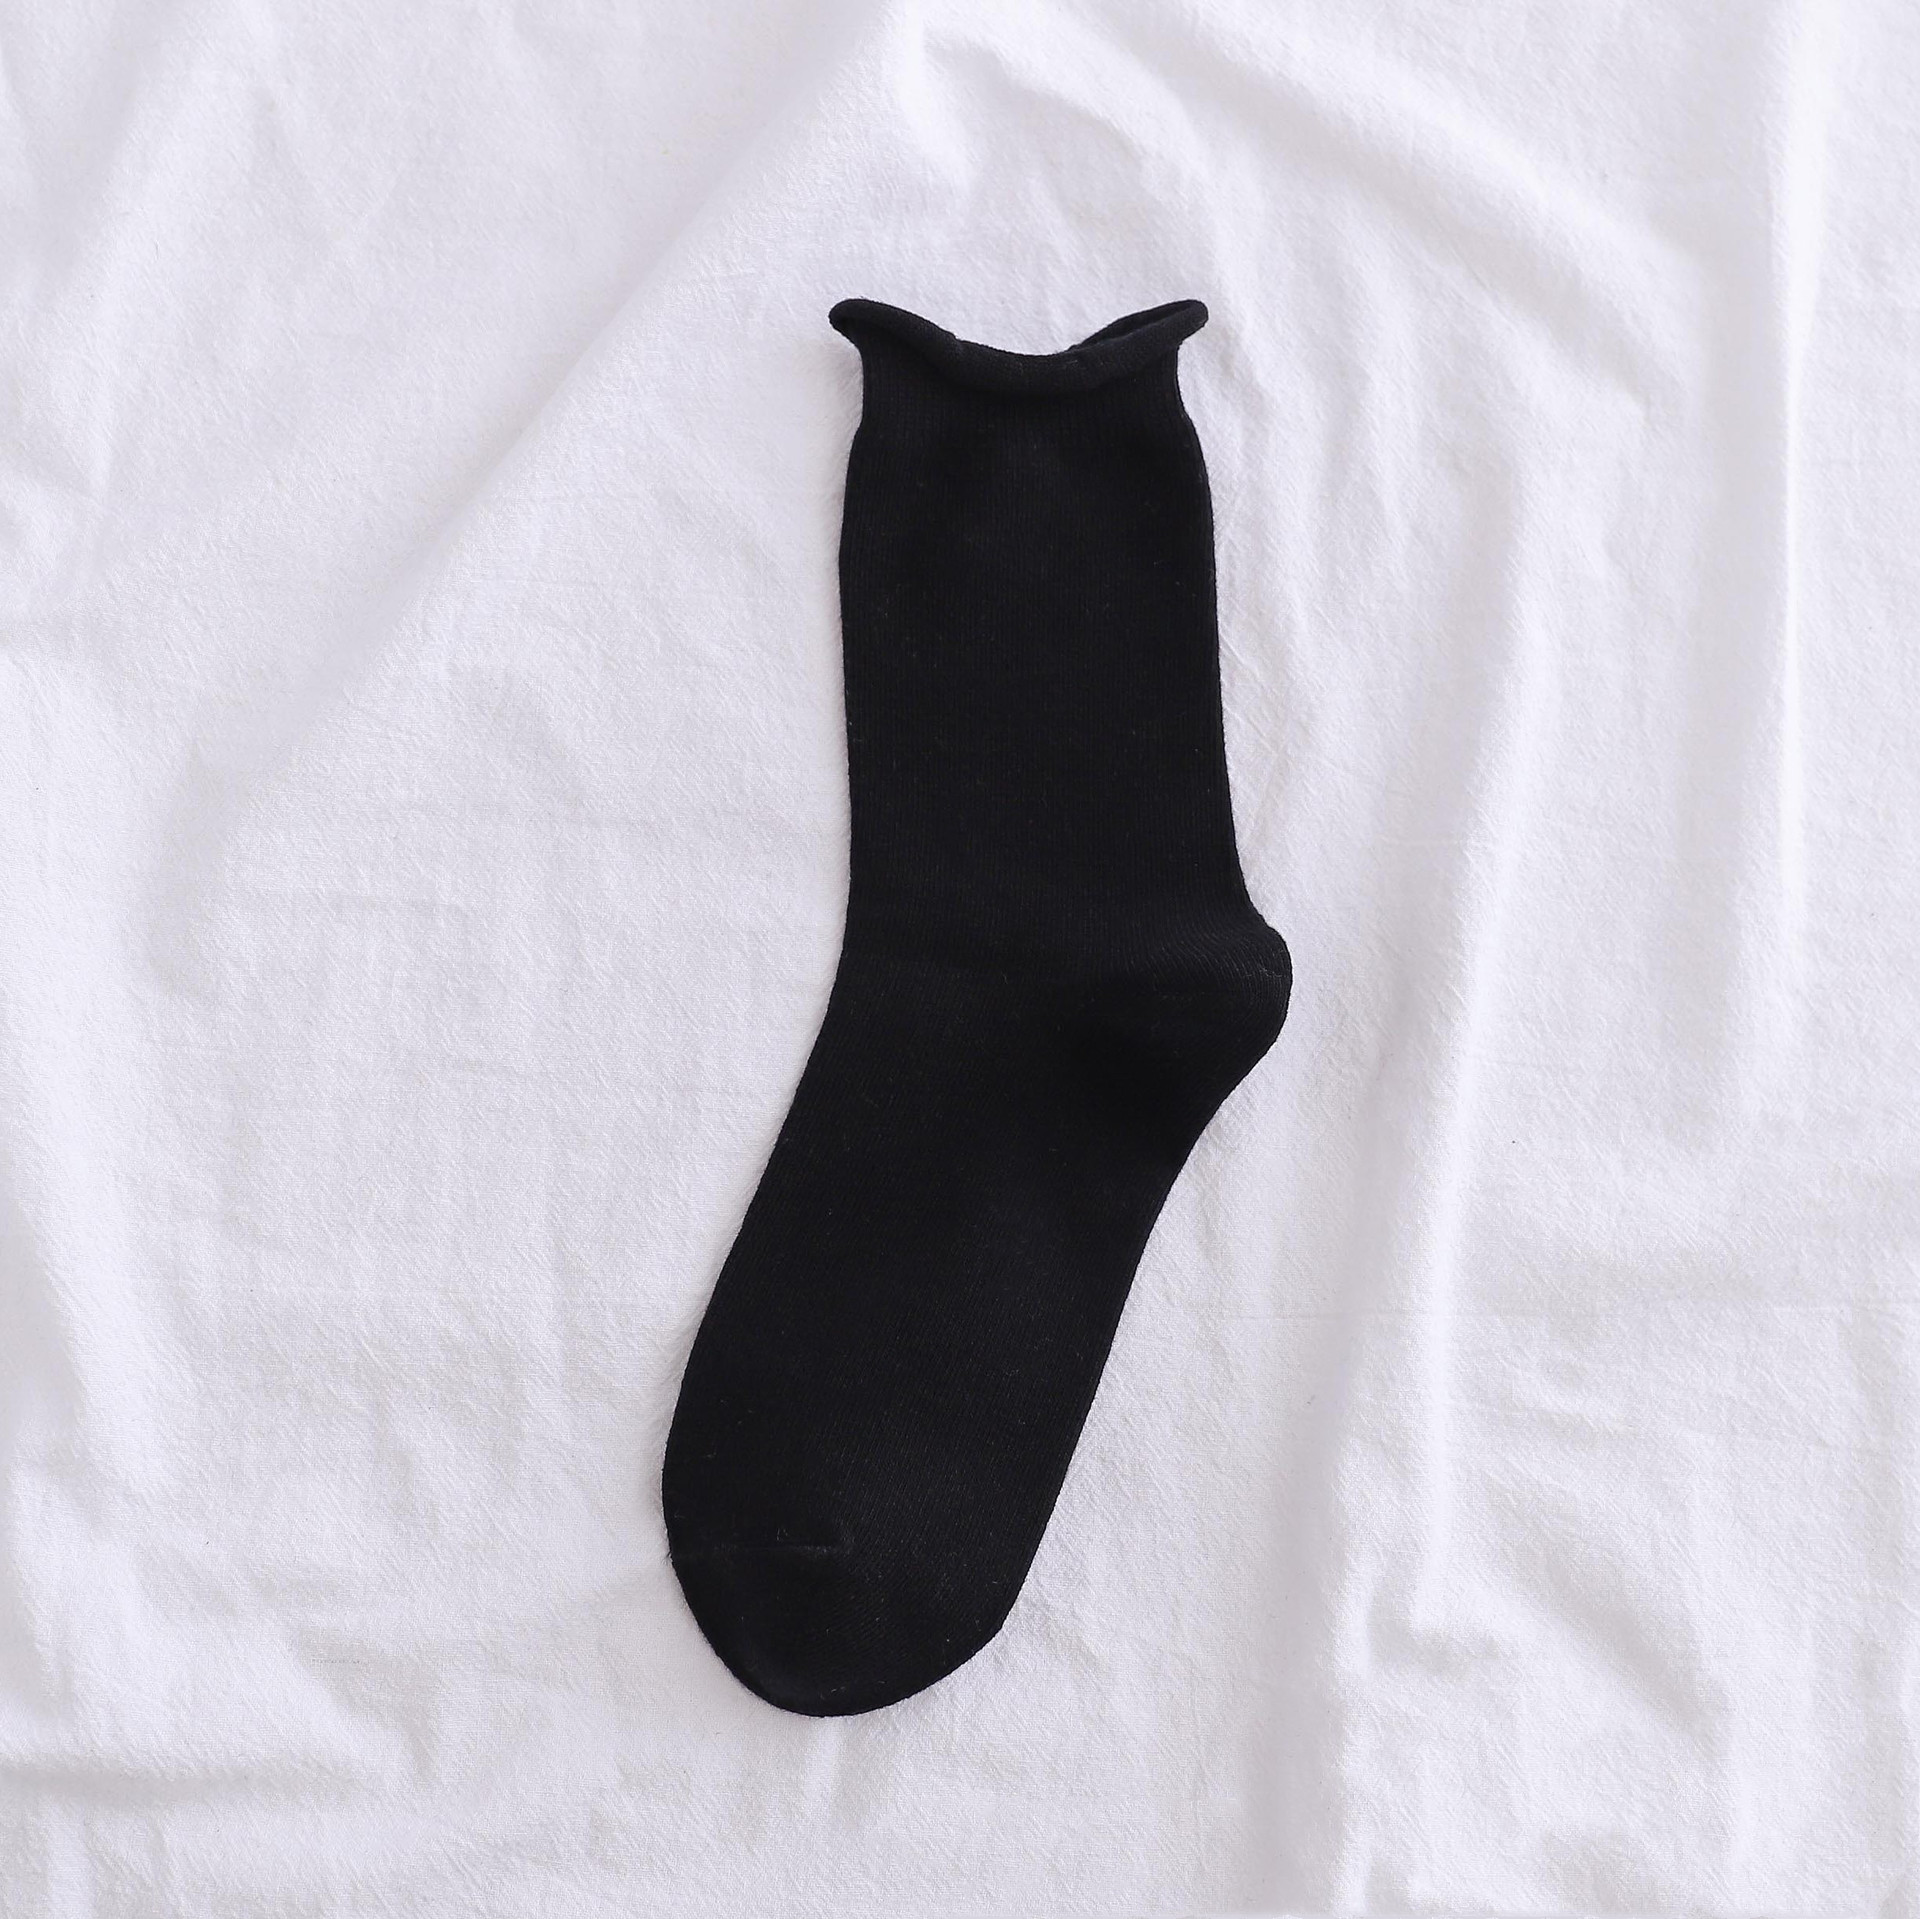 b85d54fb 1501 4620 b958 e56b938c0894 - Comfy women's cotton socks